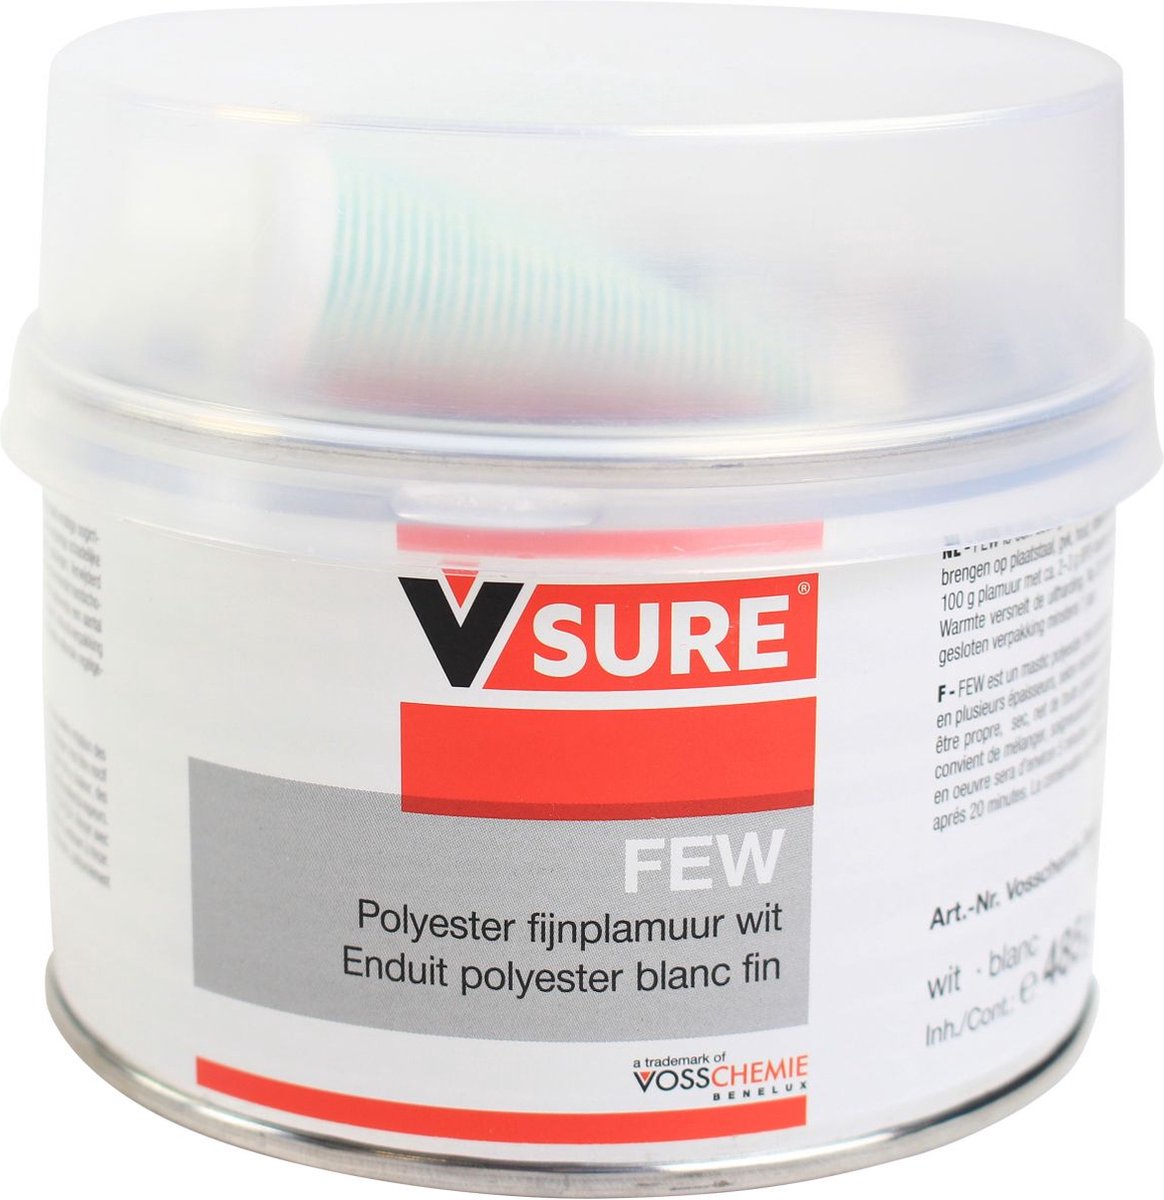 V-Sure Polyester plamuur 500gr - FEW + BPO - fijne afwerking